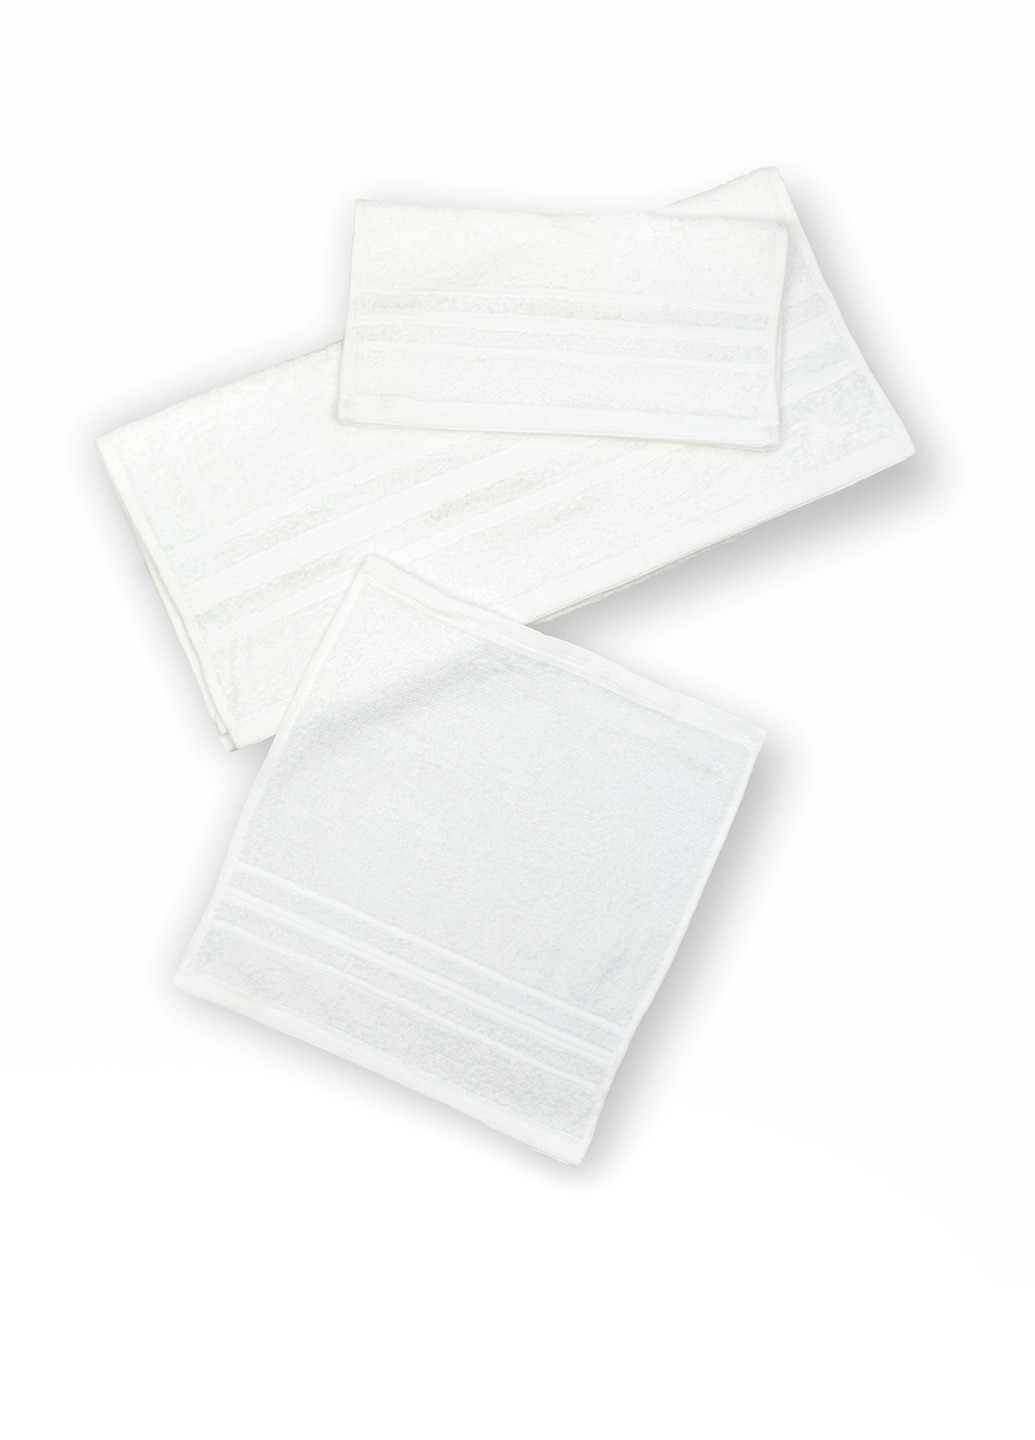 No Brand полотенце, 50х90 см однотонный белый производство - Индия